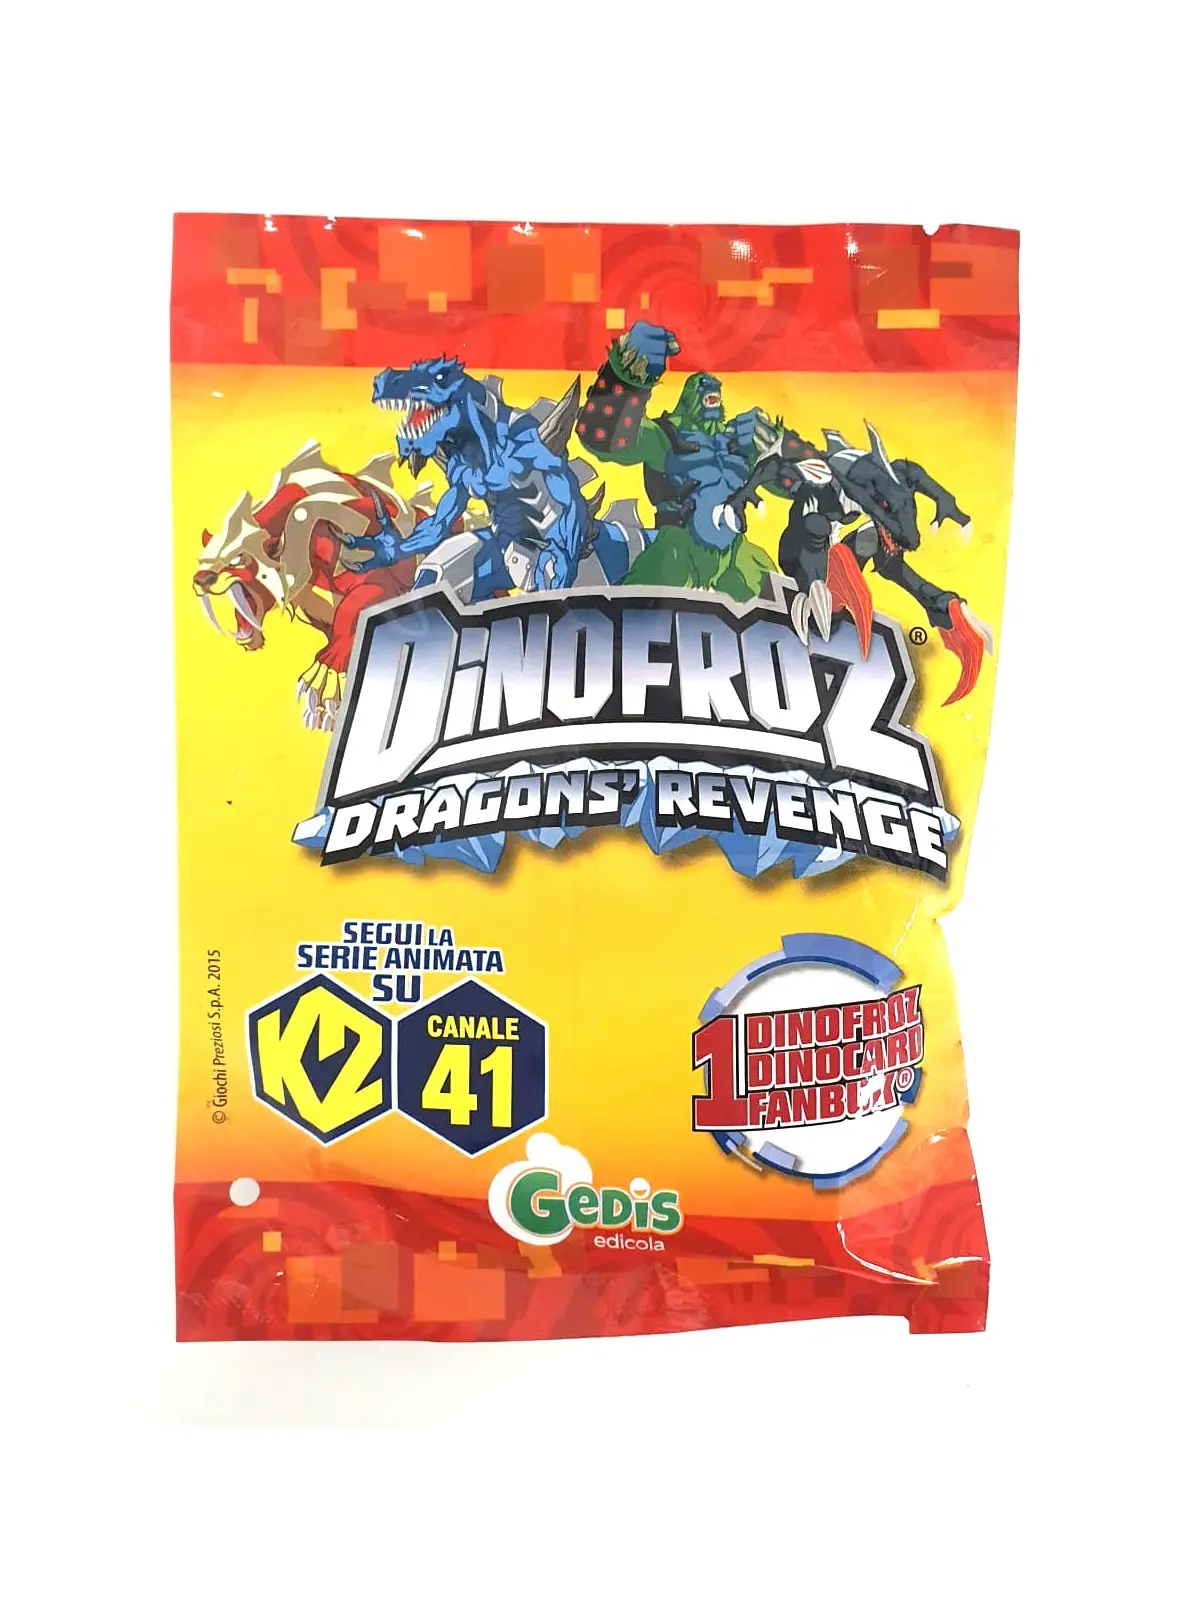 Dinofroz Dragons Revenge